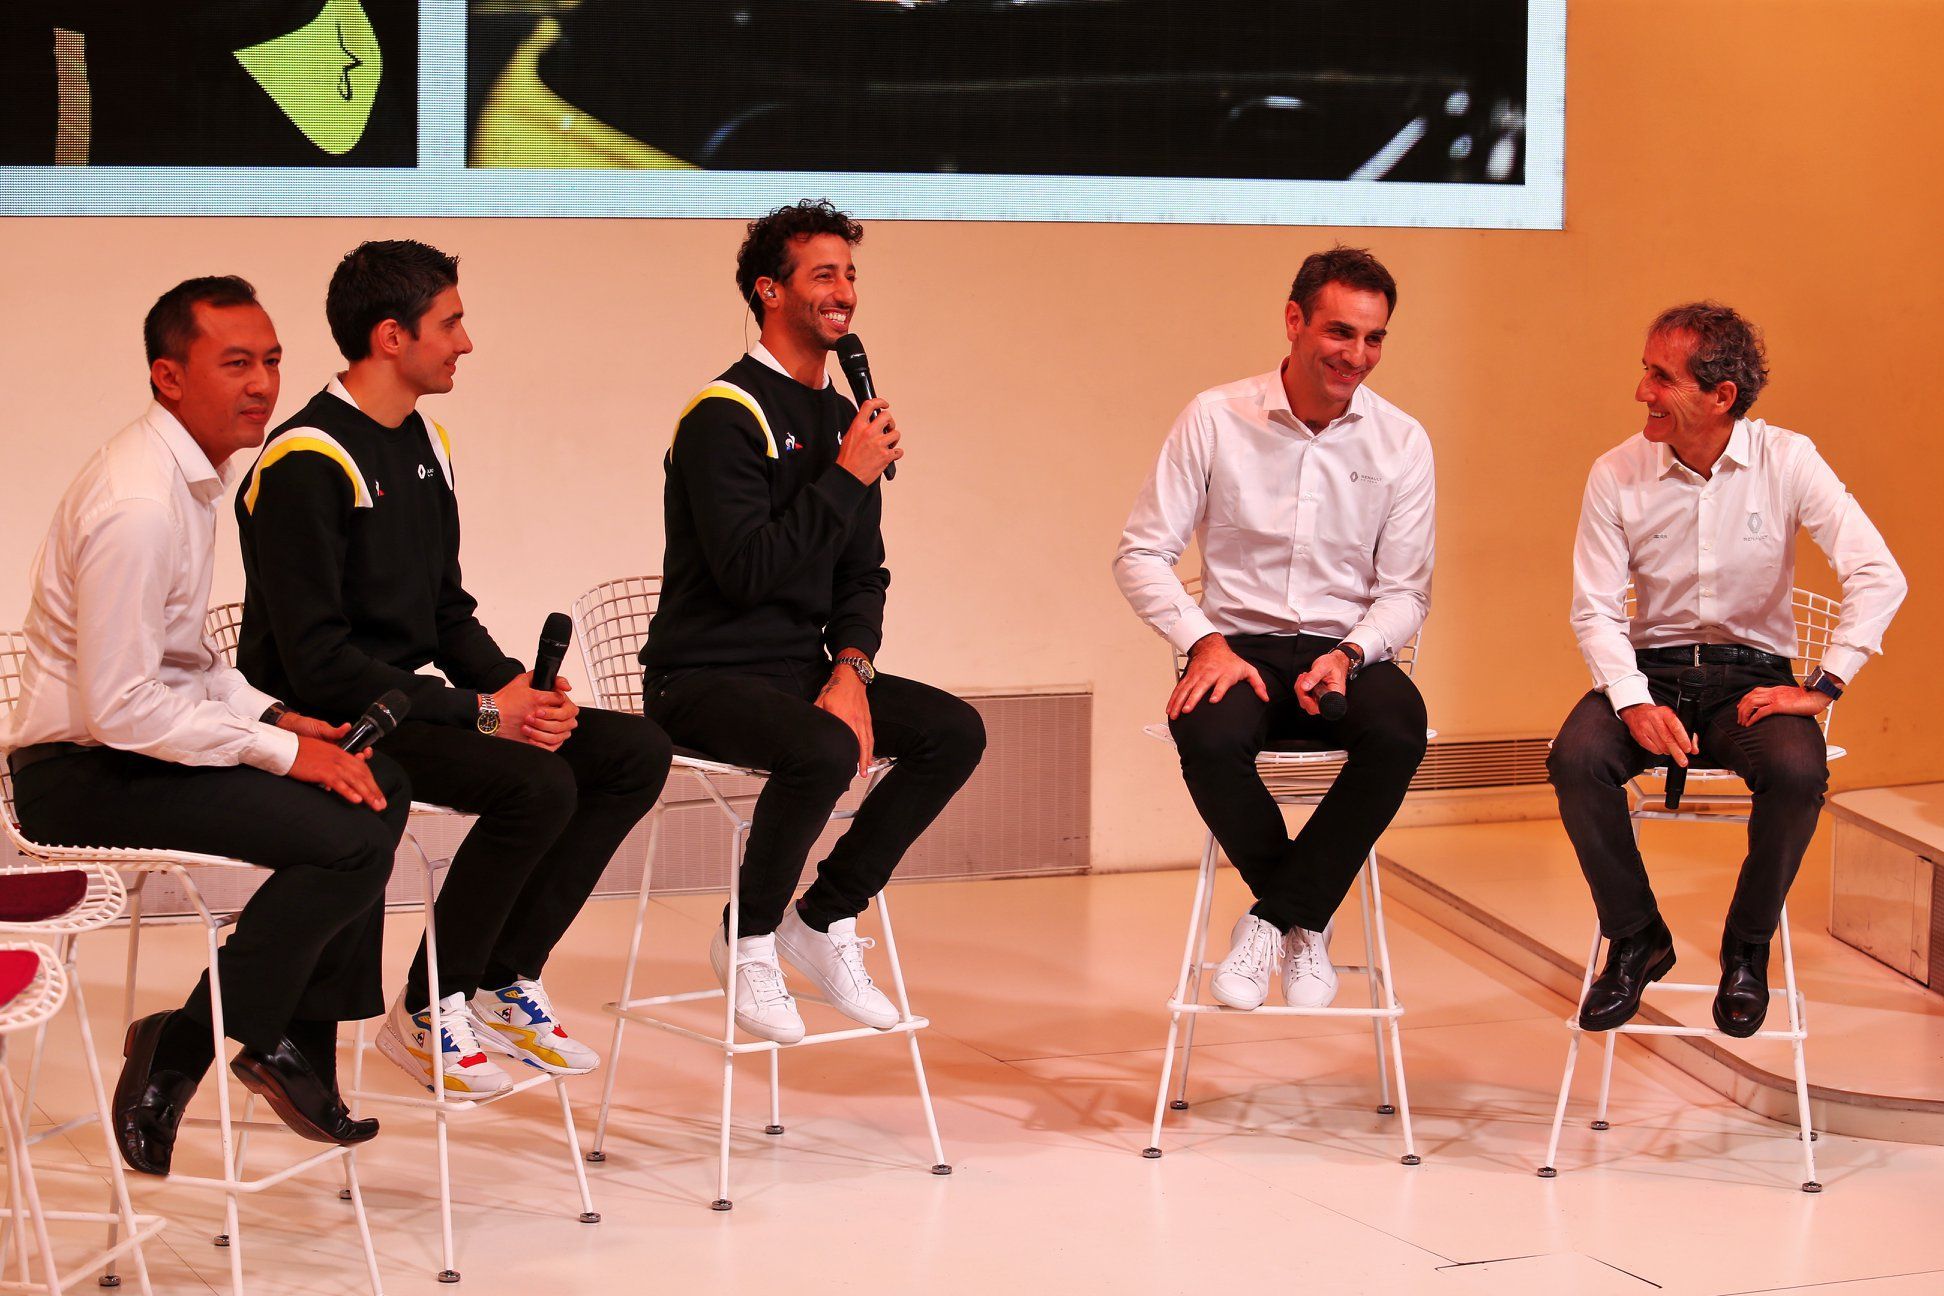 Cyril Abiteboul, Daniel Ricciardo, Esteban Ocon